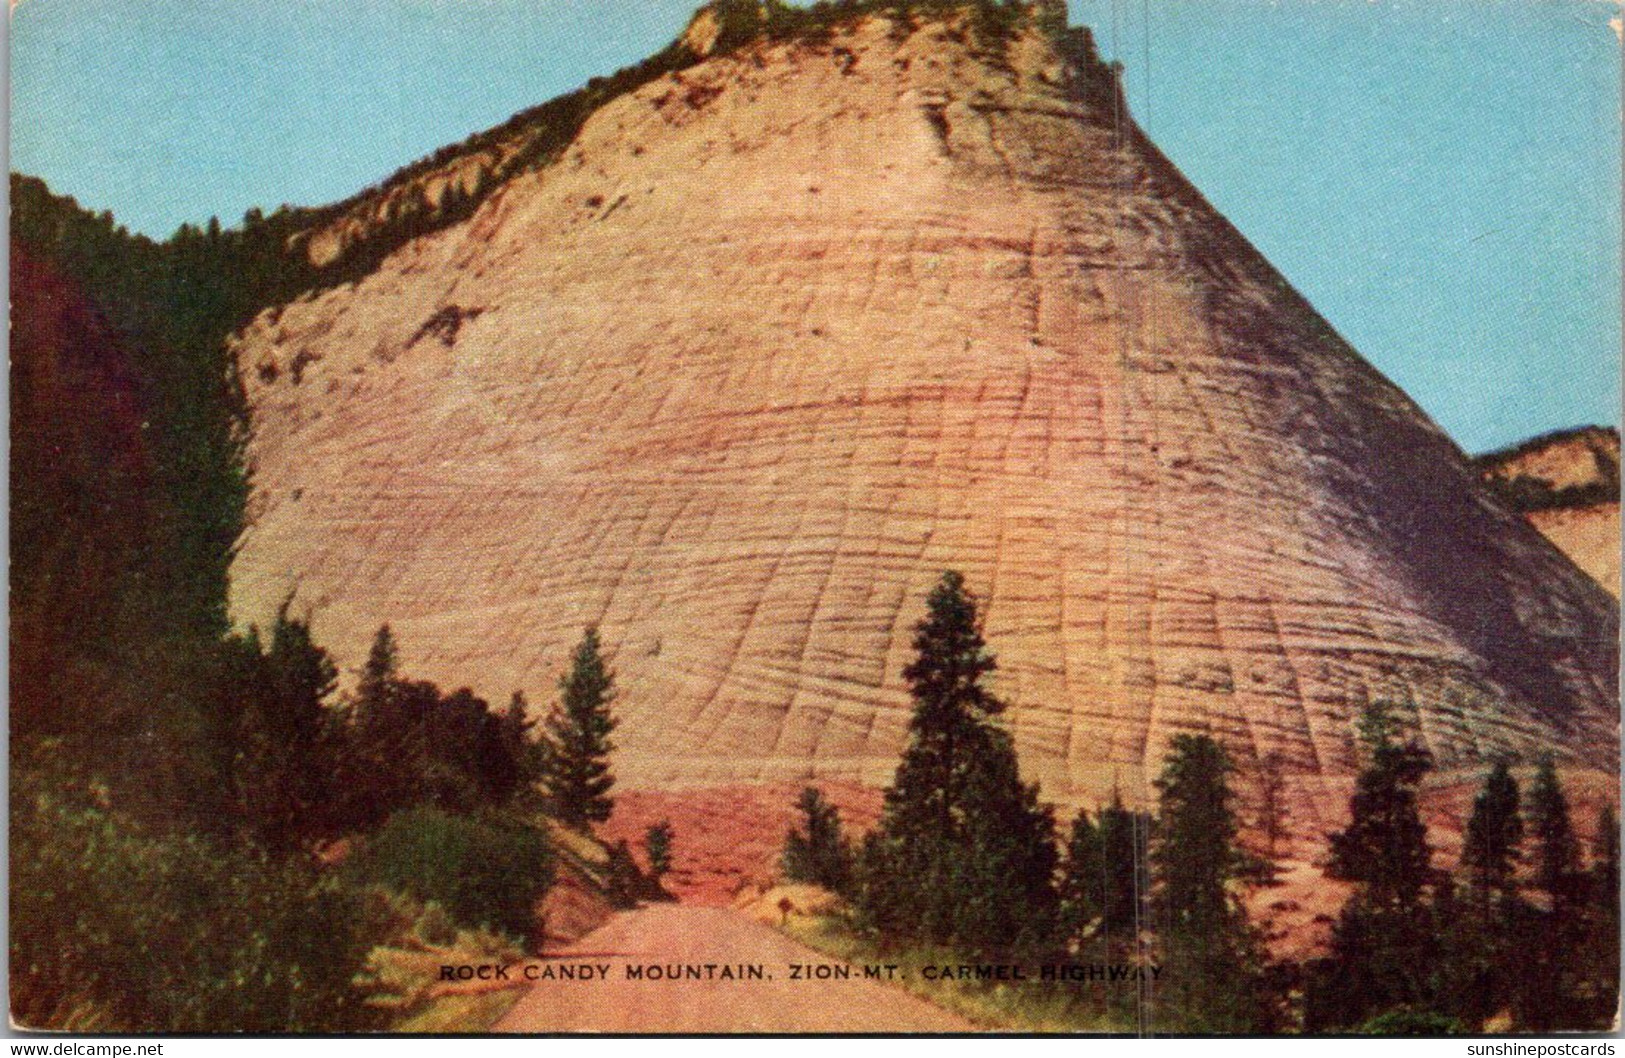 Utah Zion-Mount Carmel Highway Carvings In Sandstone Formations - Zion